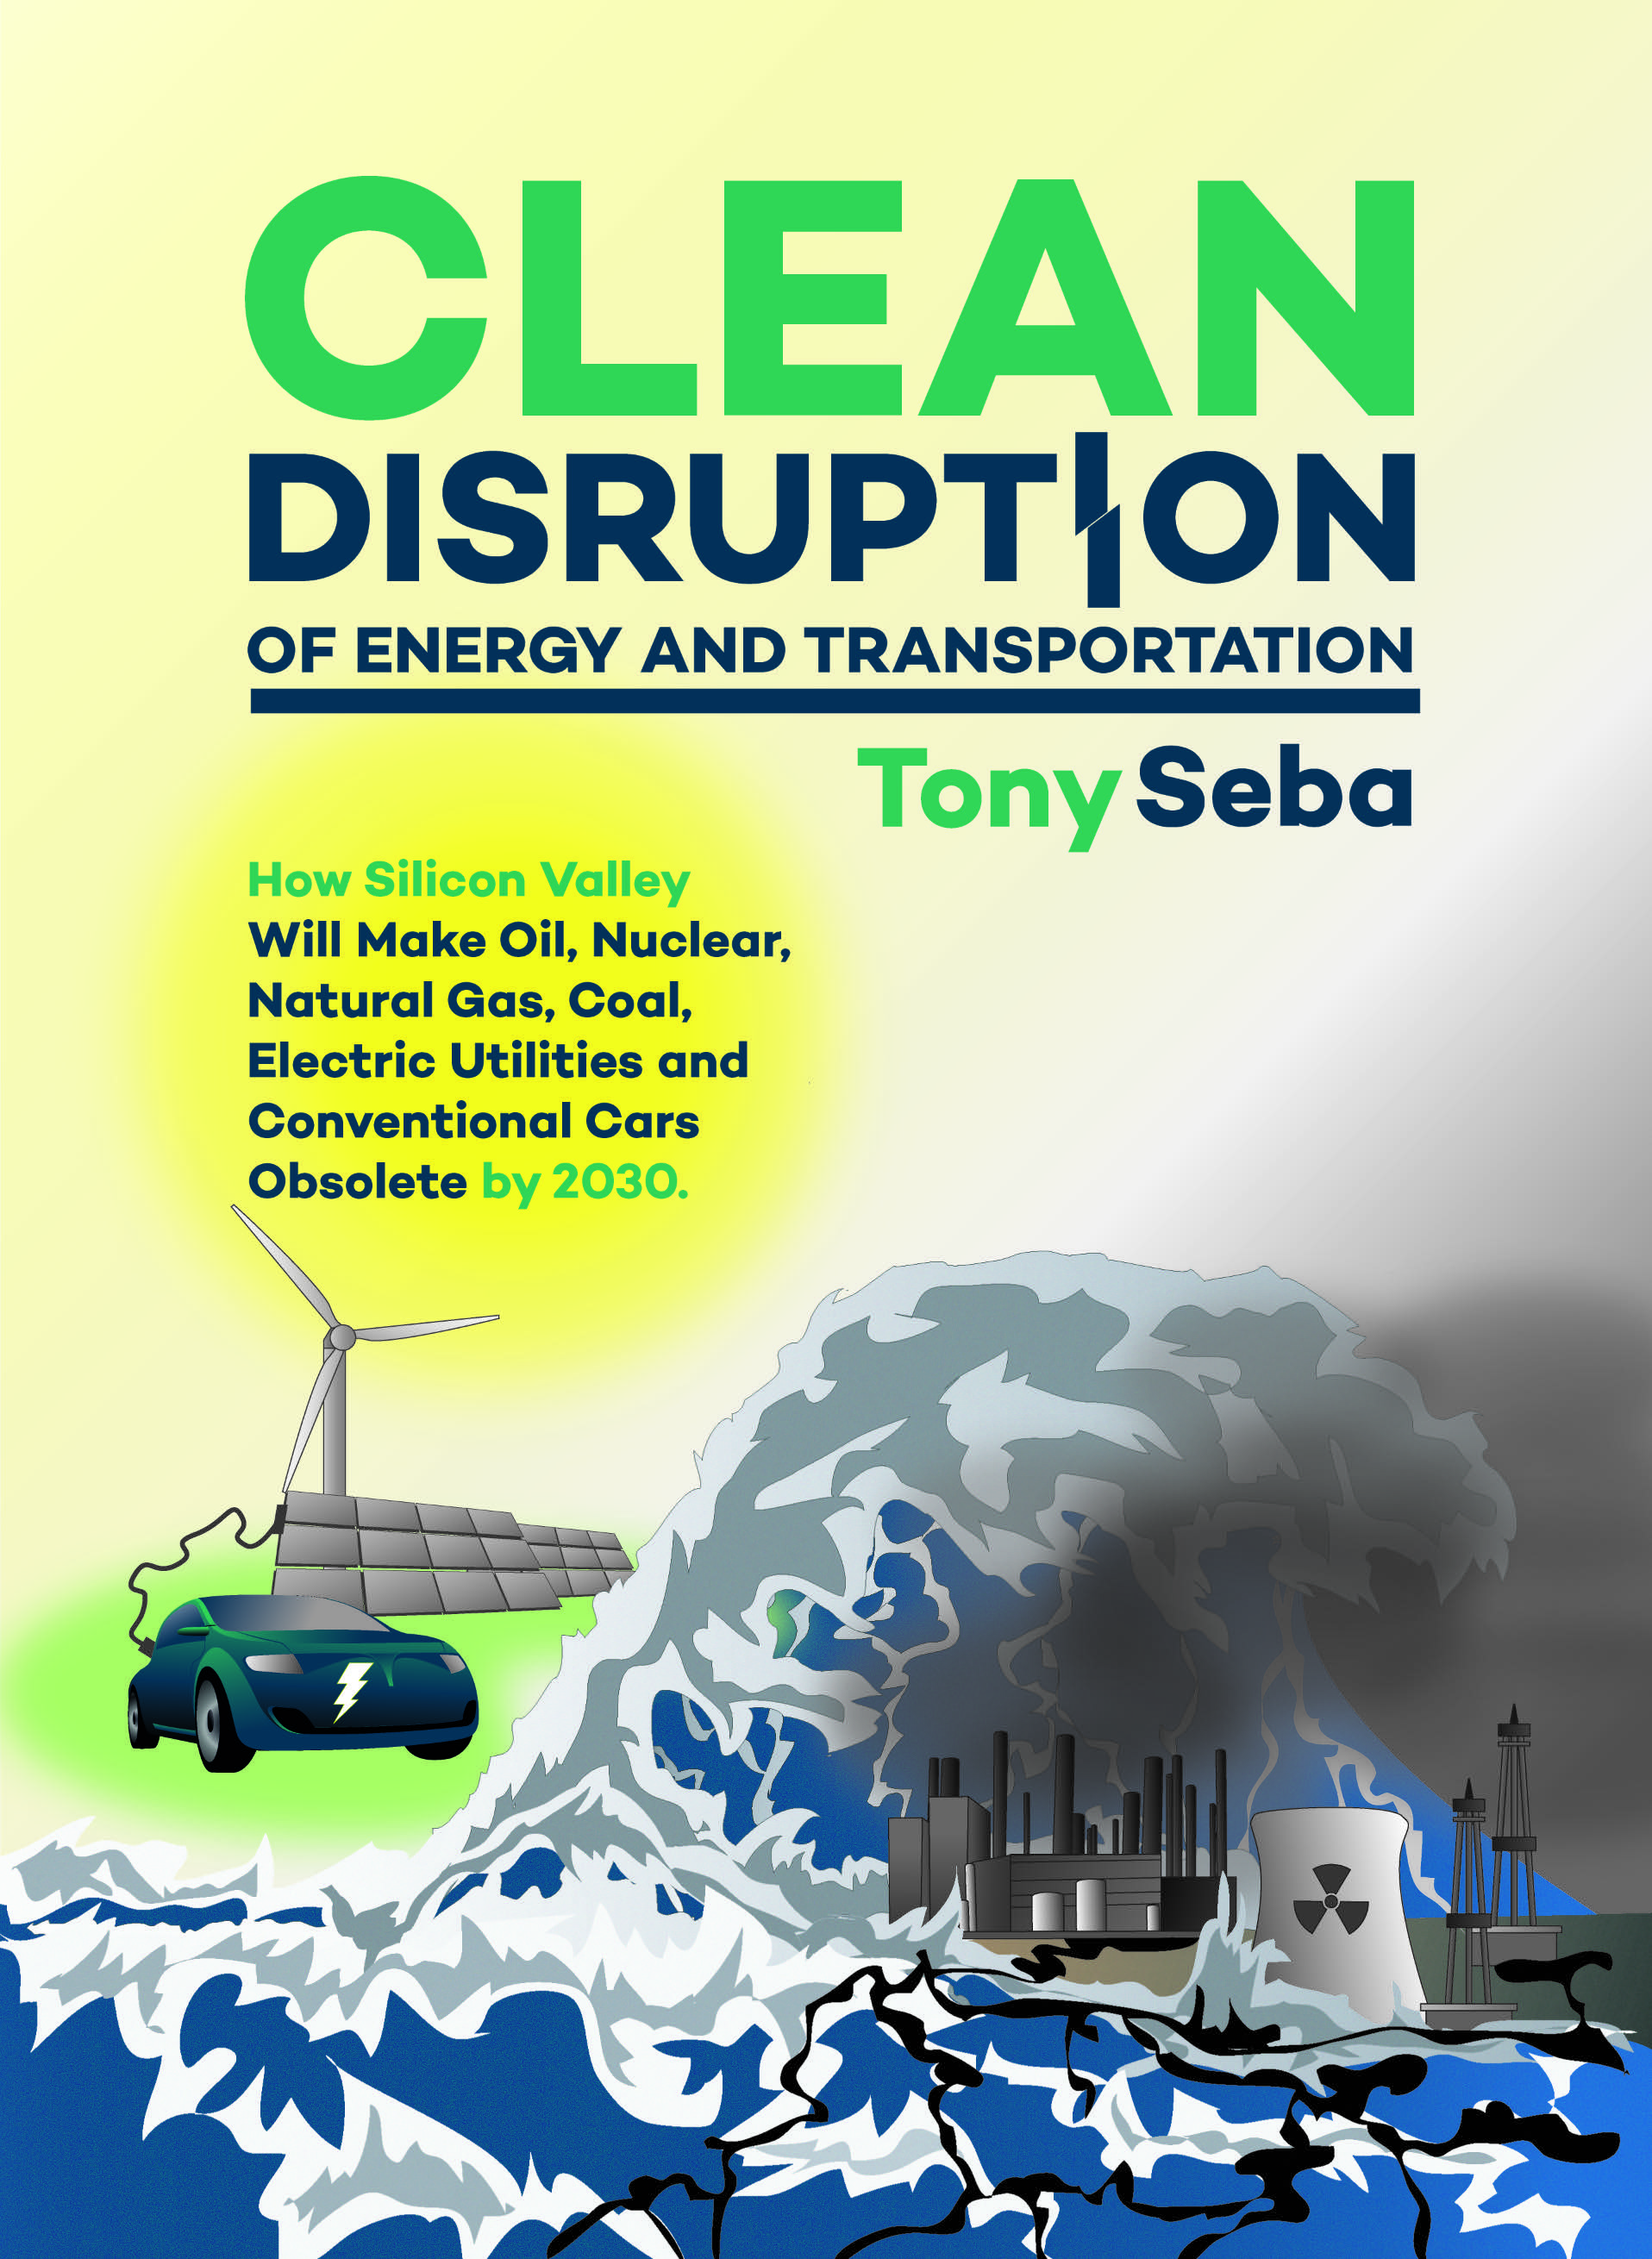 Deloitte Selects Tony Seba’s “Clean Disruption of Energy and